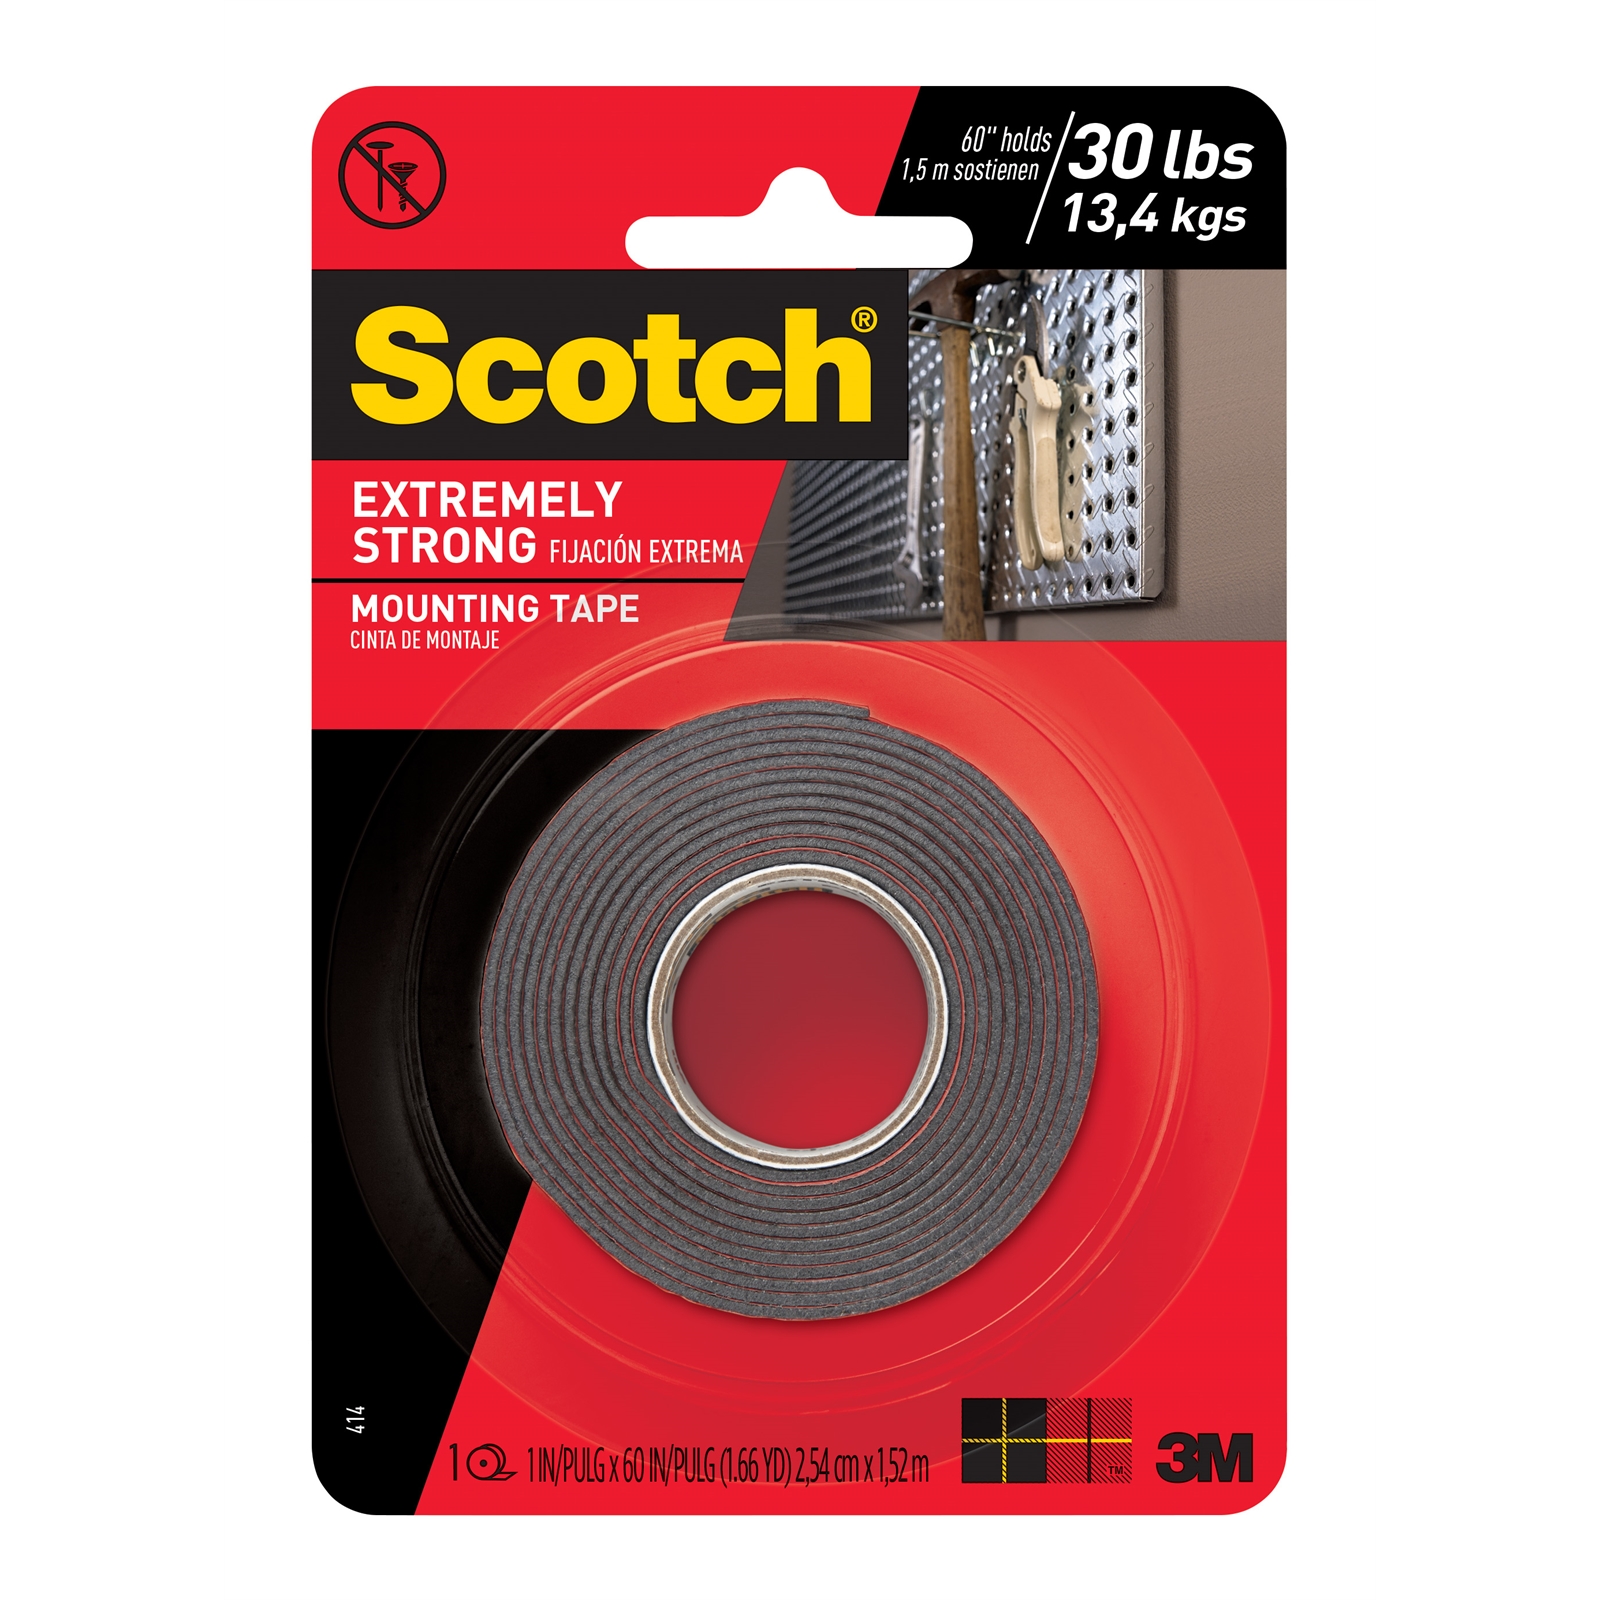 Scotch Extreme Mounting Tape 2.5cm x 1.5m